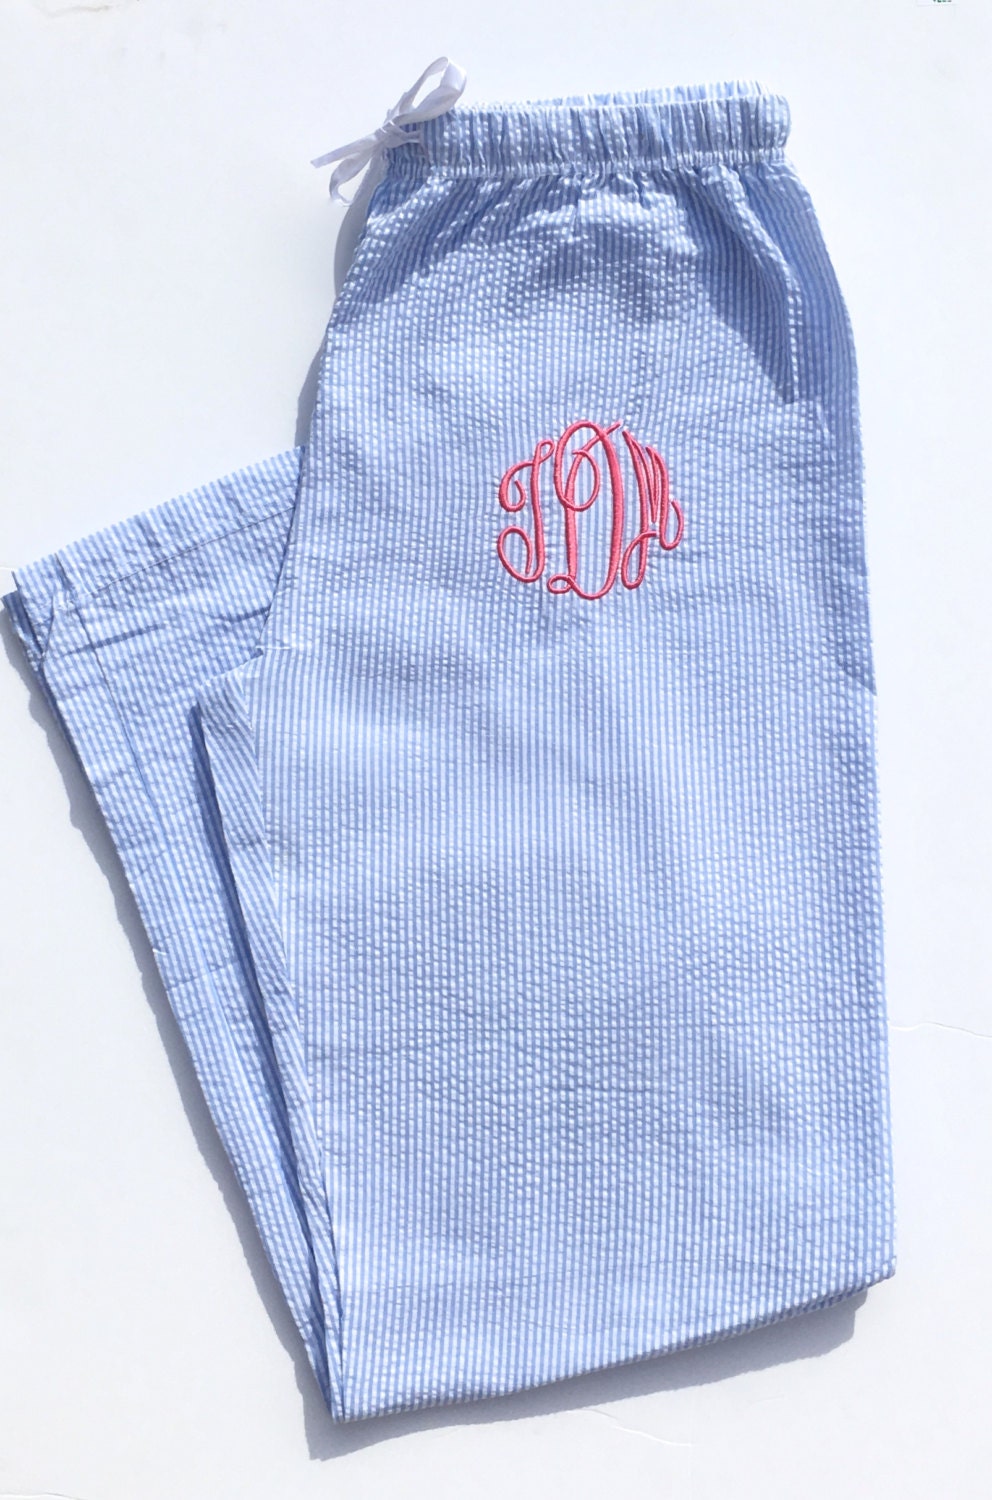 Louis Vuitton® Midnight Monogram Pajama Pants Navy. Size 38  Loungewear  fashion, Monogrammed pajamas, Monogrammed pajama pants